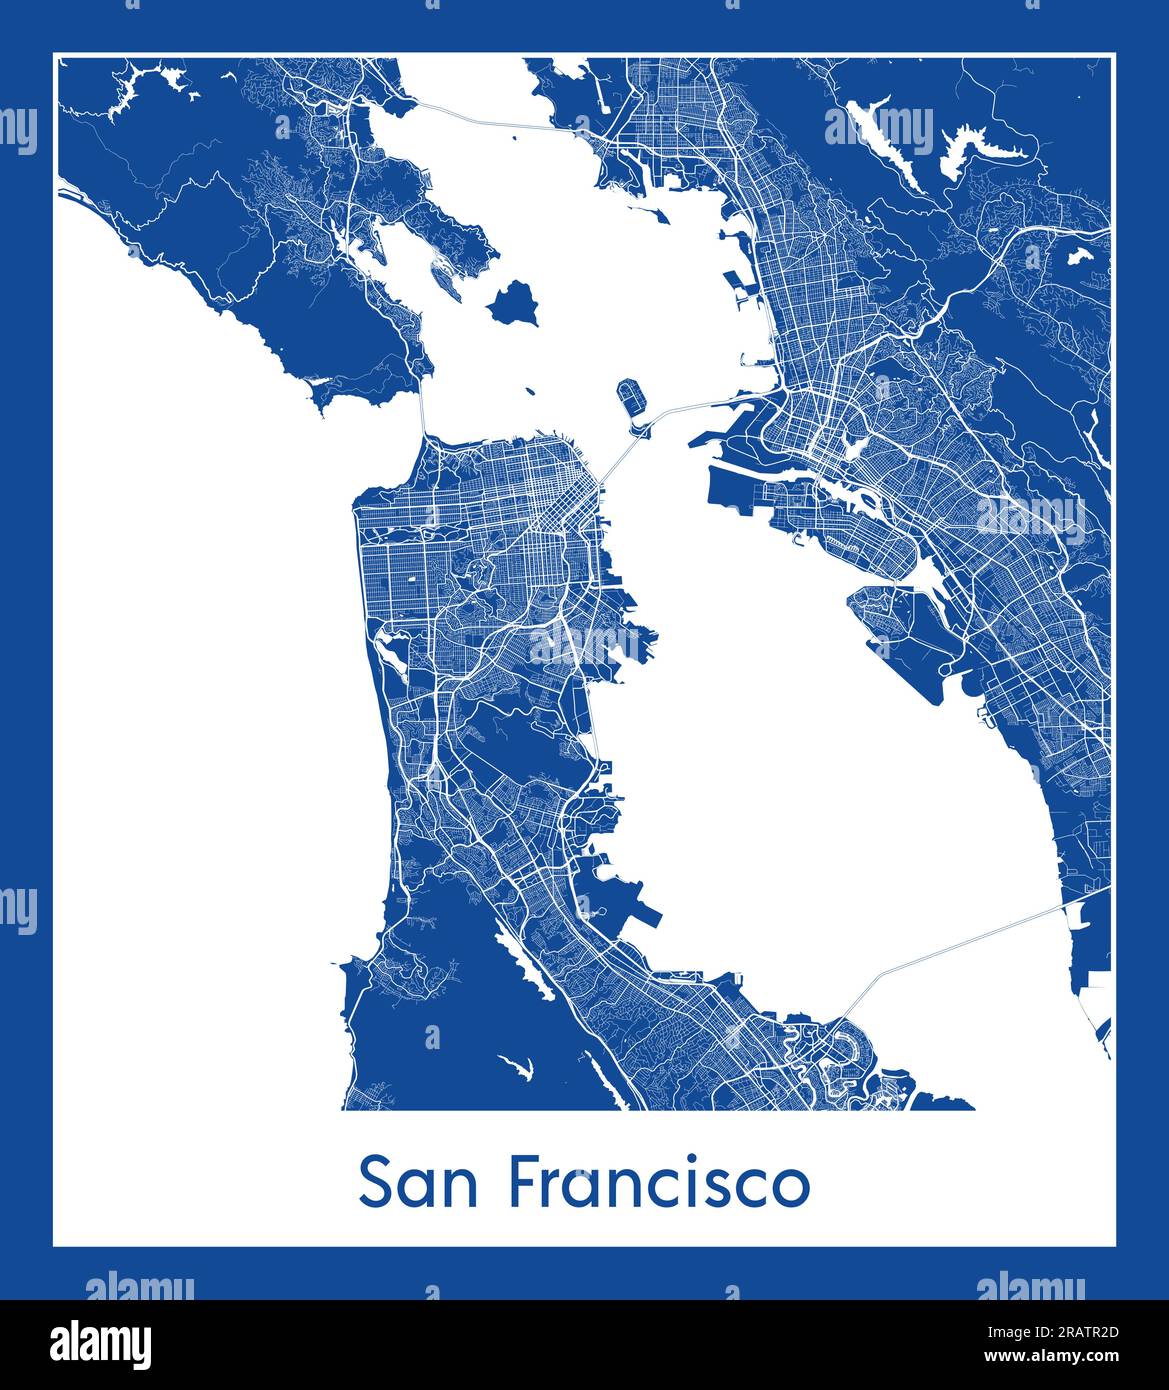 San Francisco United States North America City map blue print vector illustration Stock Vector